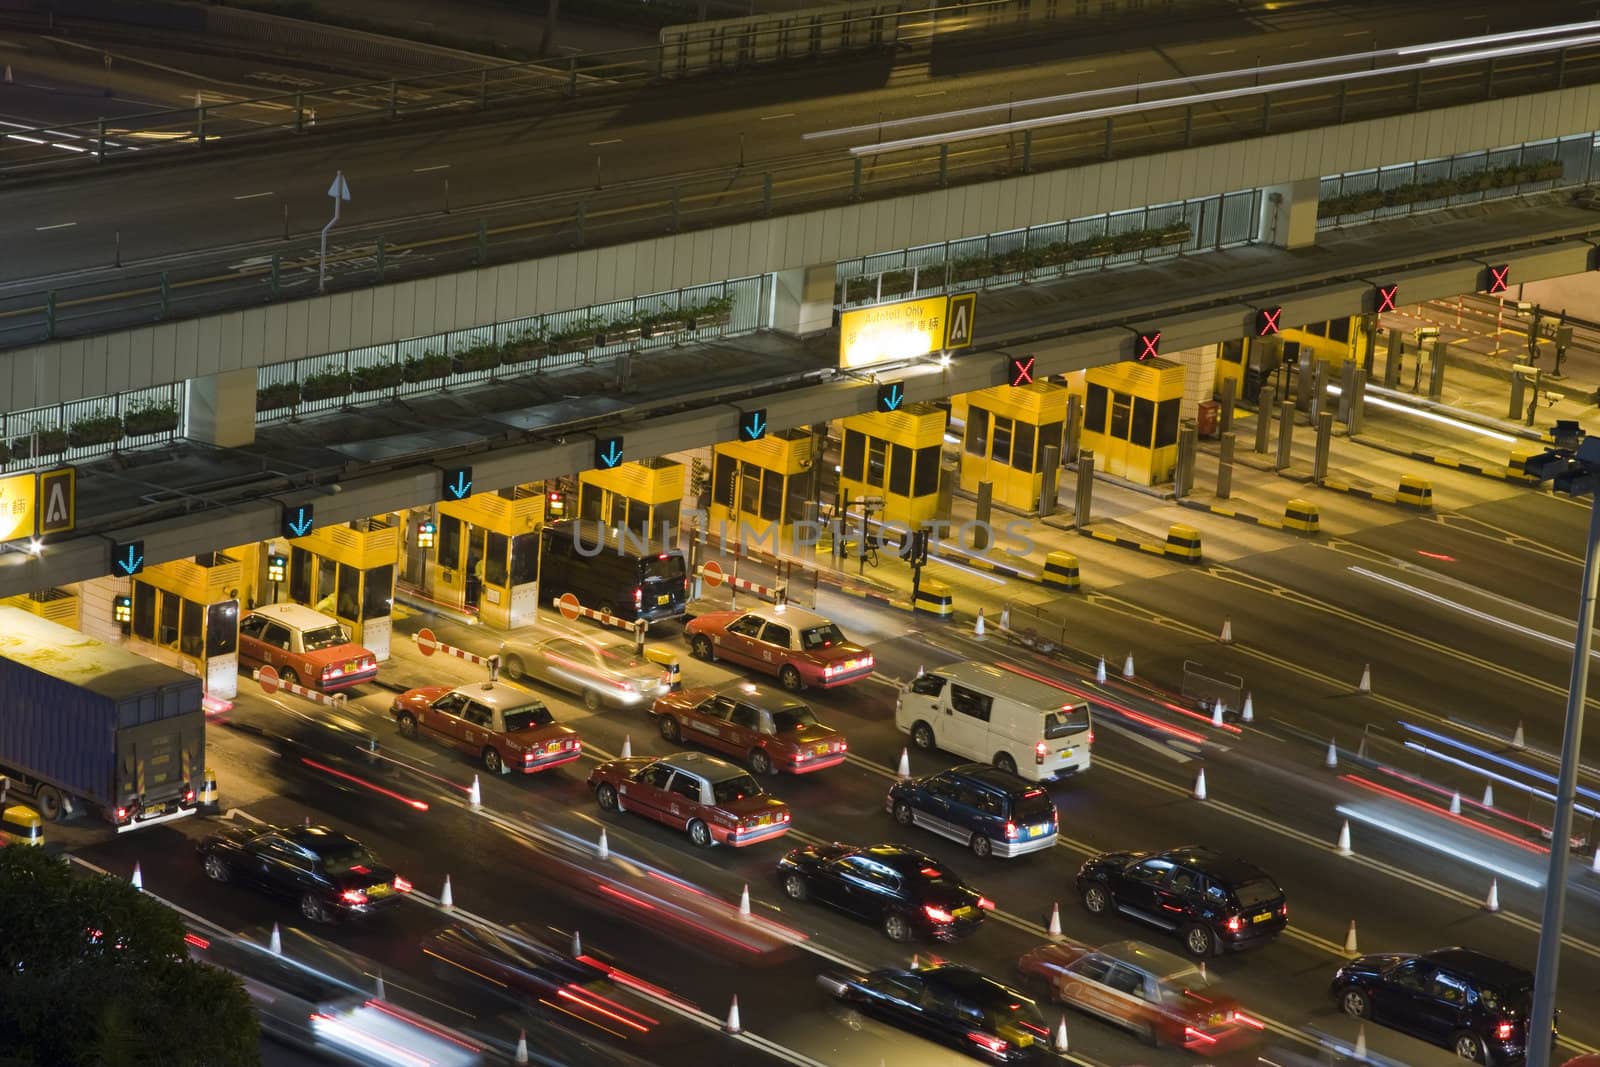 Traffic jam in Hong Kong at night